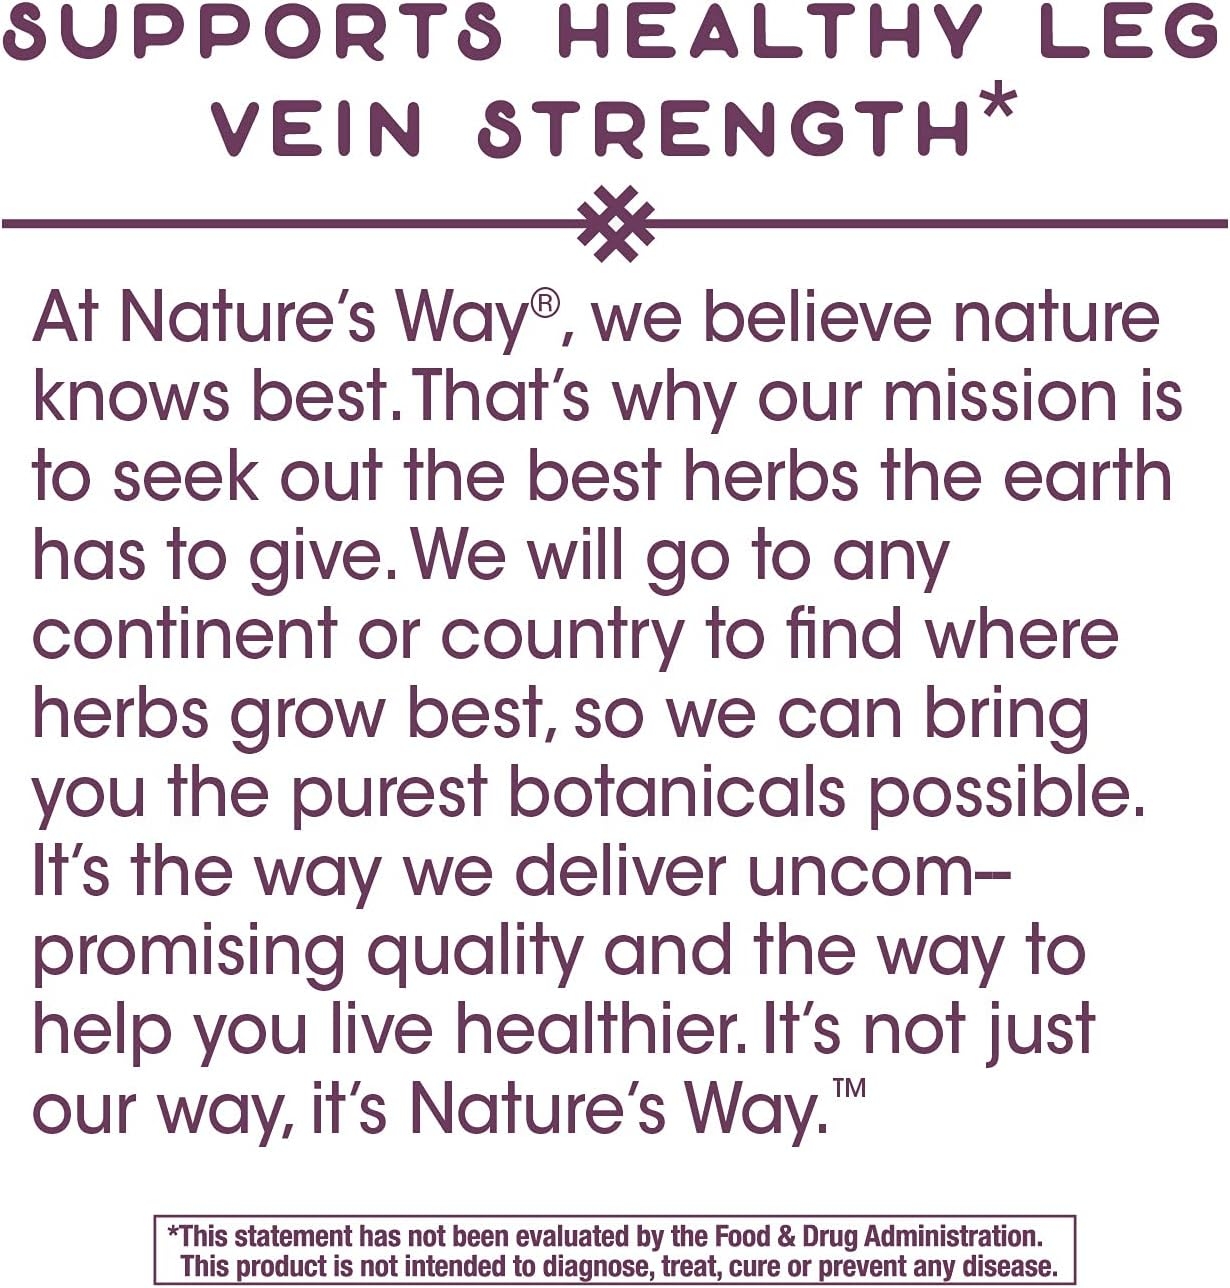 Nature's Way Leg Veins Support Blend*; with 6-Herb Blend; Vegan; 60 Vegan Capsules